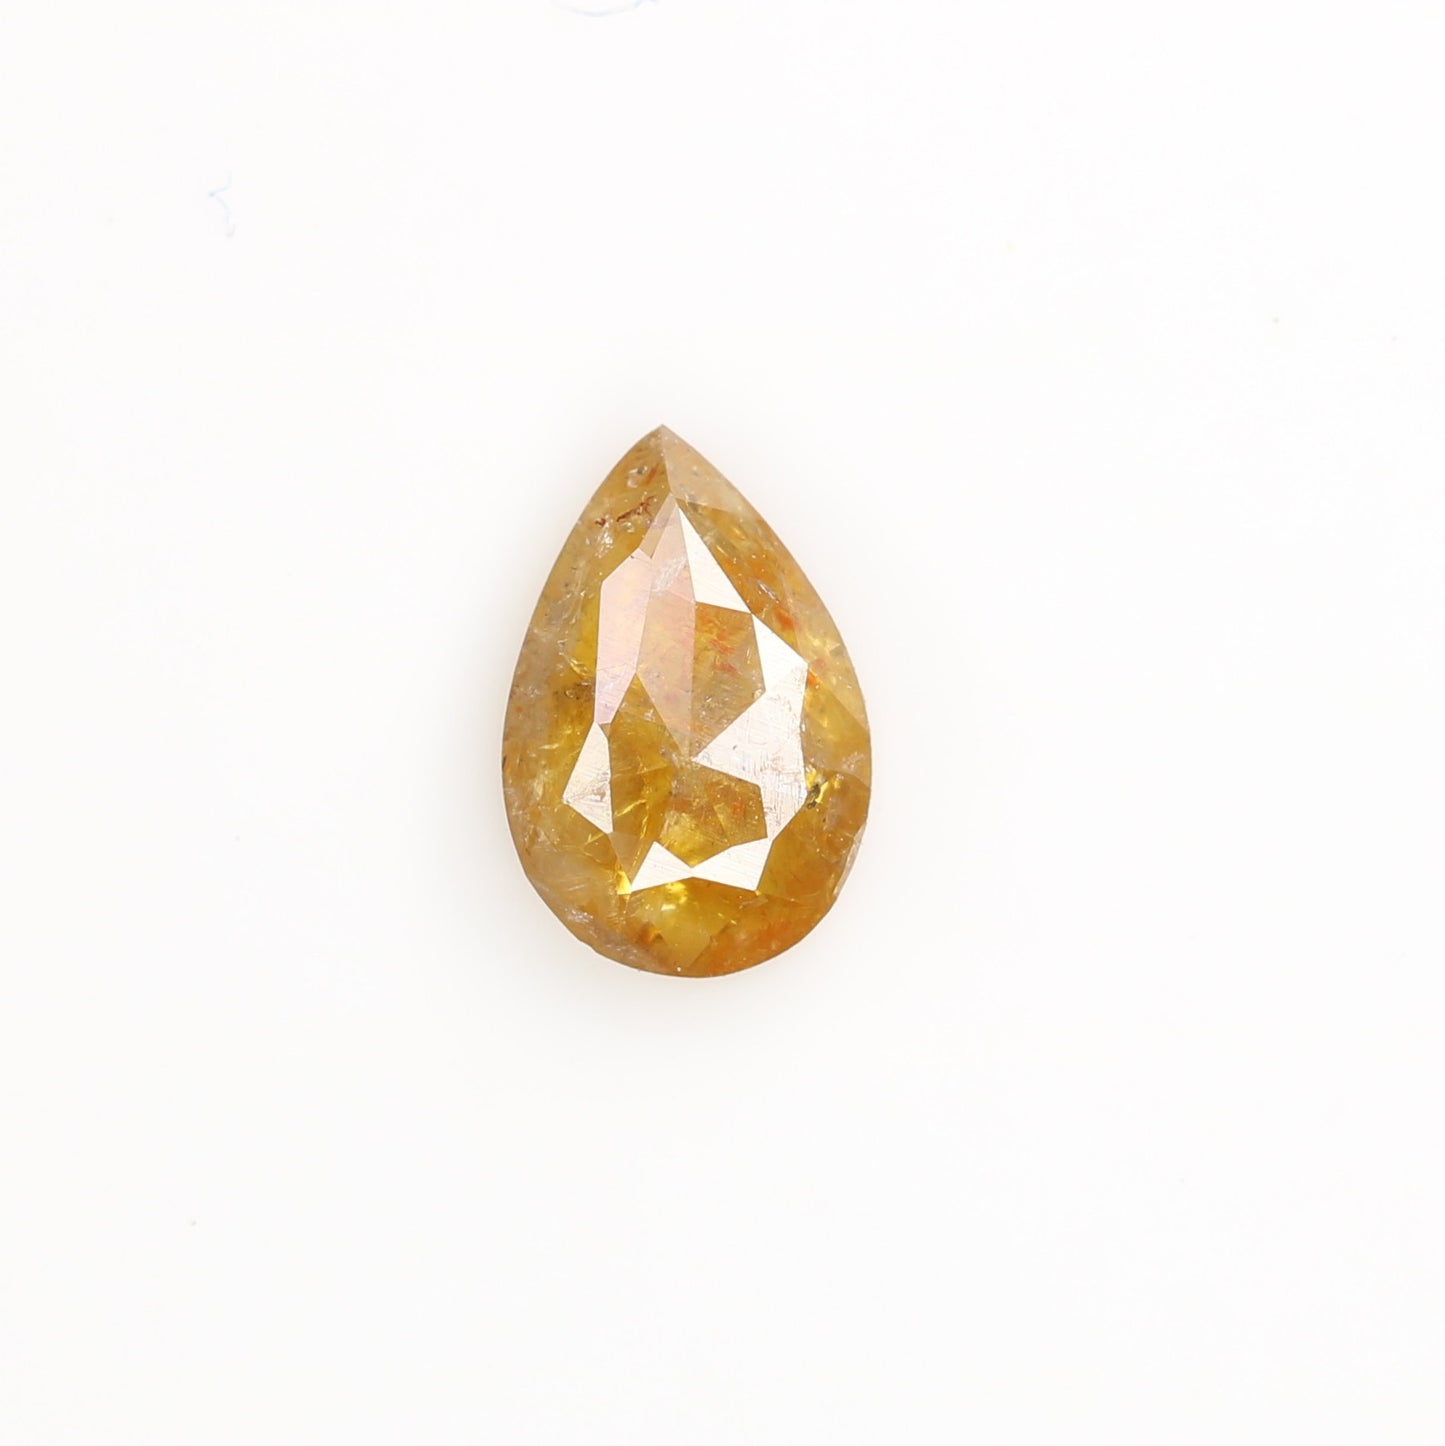 0.62 CT Golden Yellow Brilliant Cut Pear Diamond For Halo Pendant | Prong Set Pear Diamond Jewelry